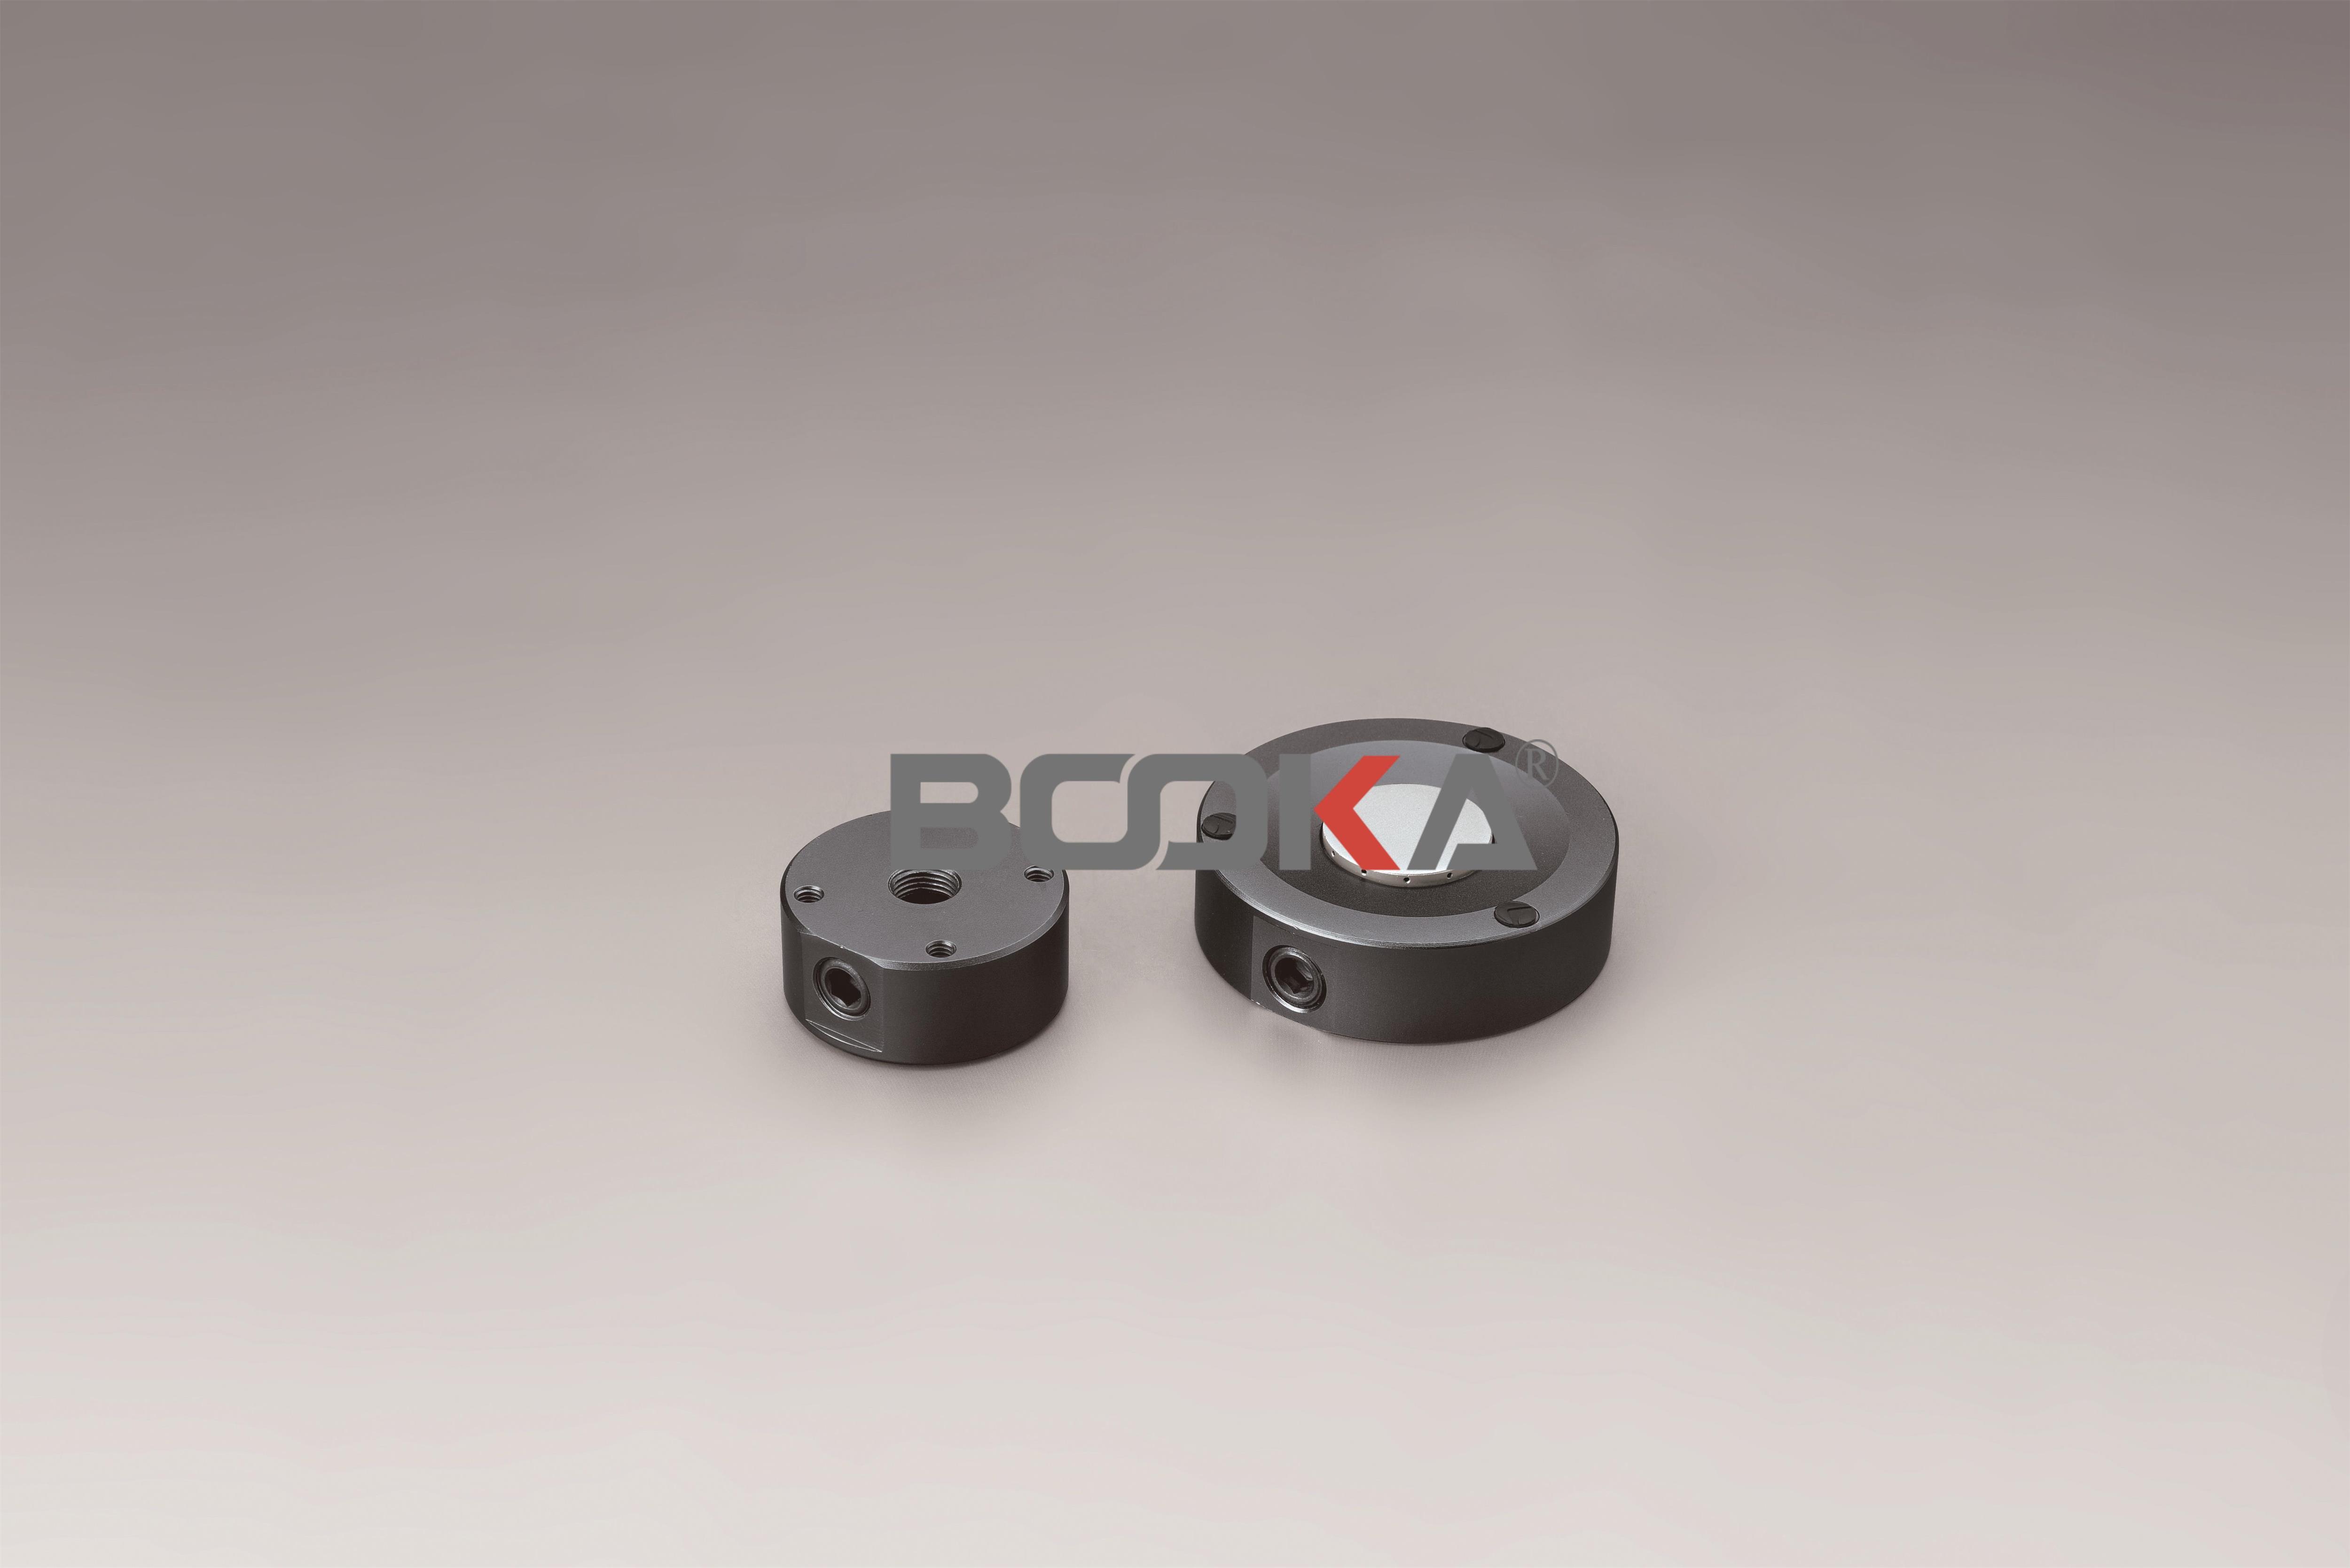 BOOKA供应UF特殊功能型非接触式-真空吸盘